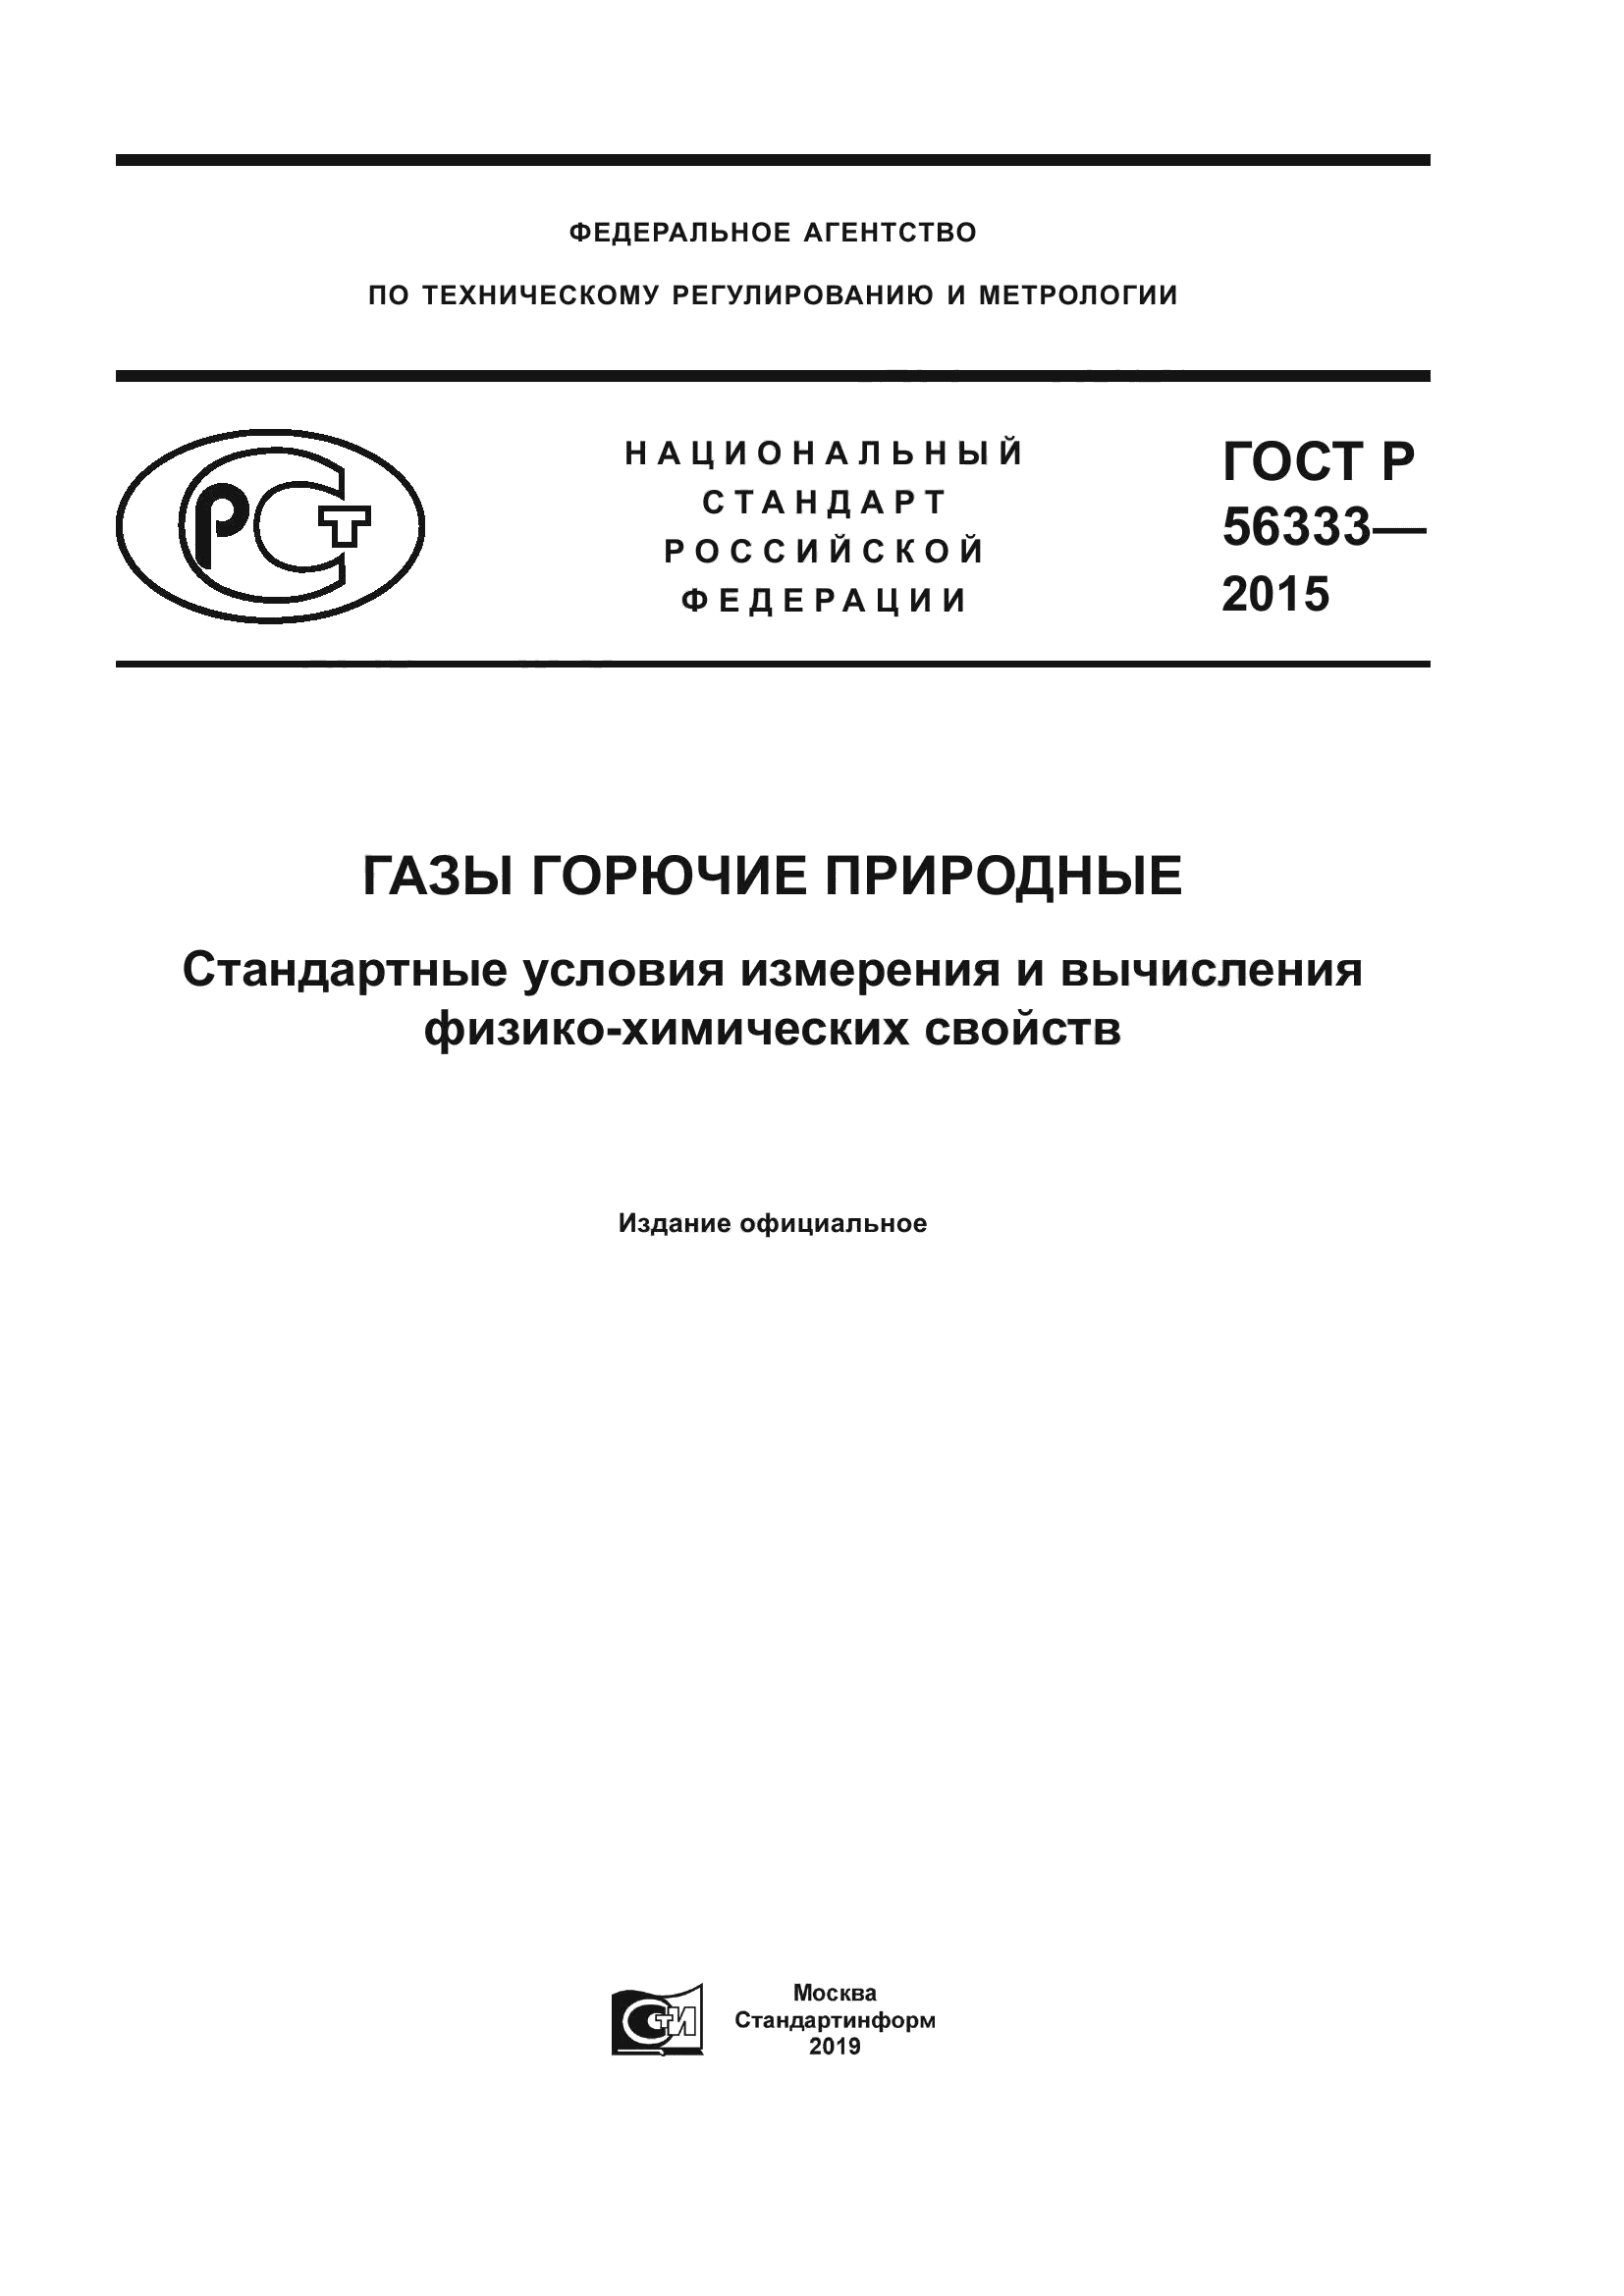 ГОСТ Р 56333-2015